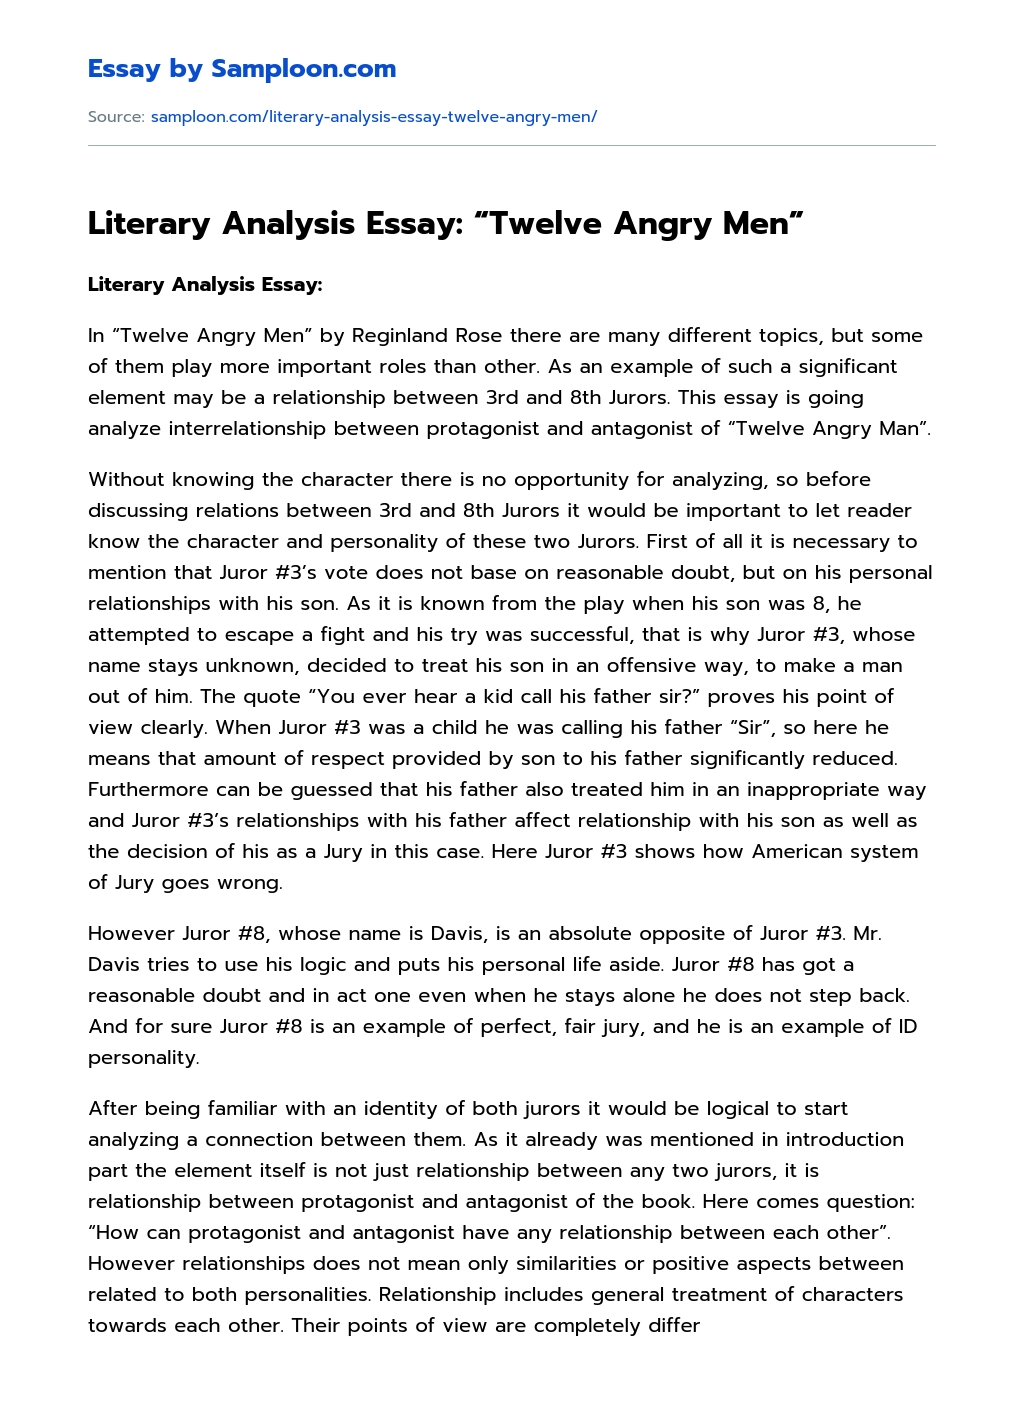 Literary Analysis Essay: “Twelve Angry Men” essay